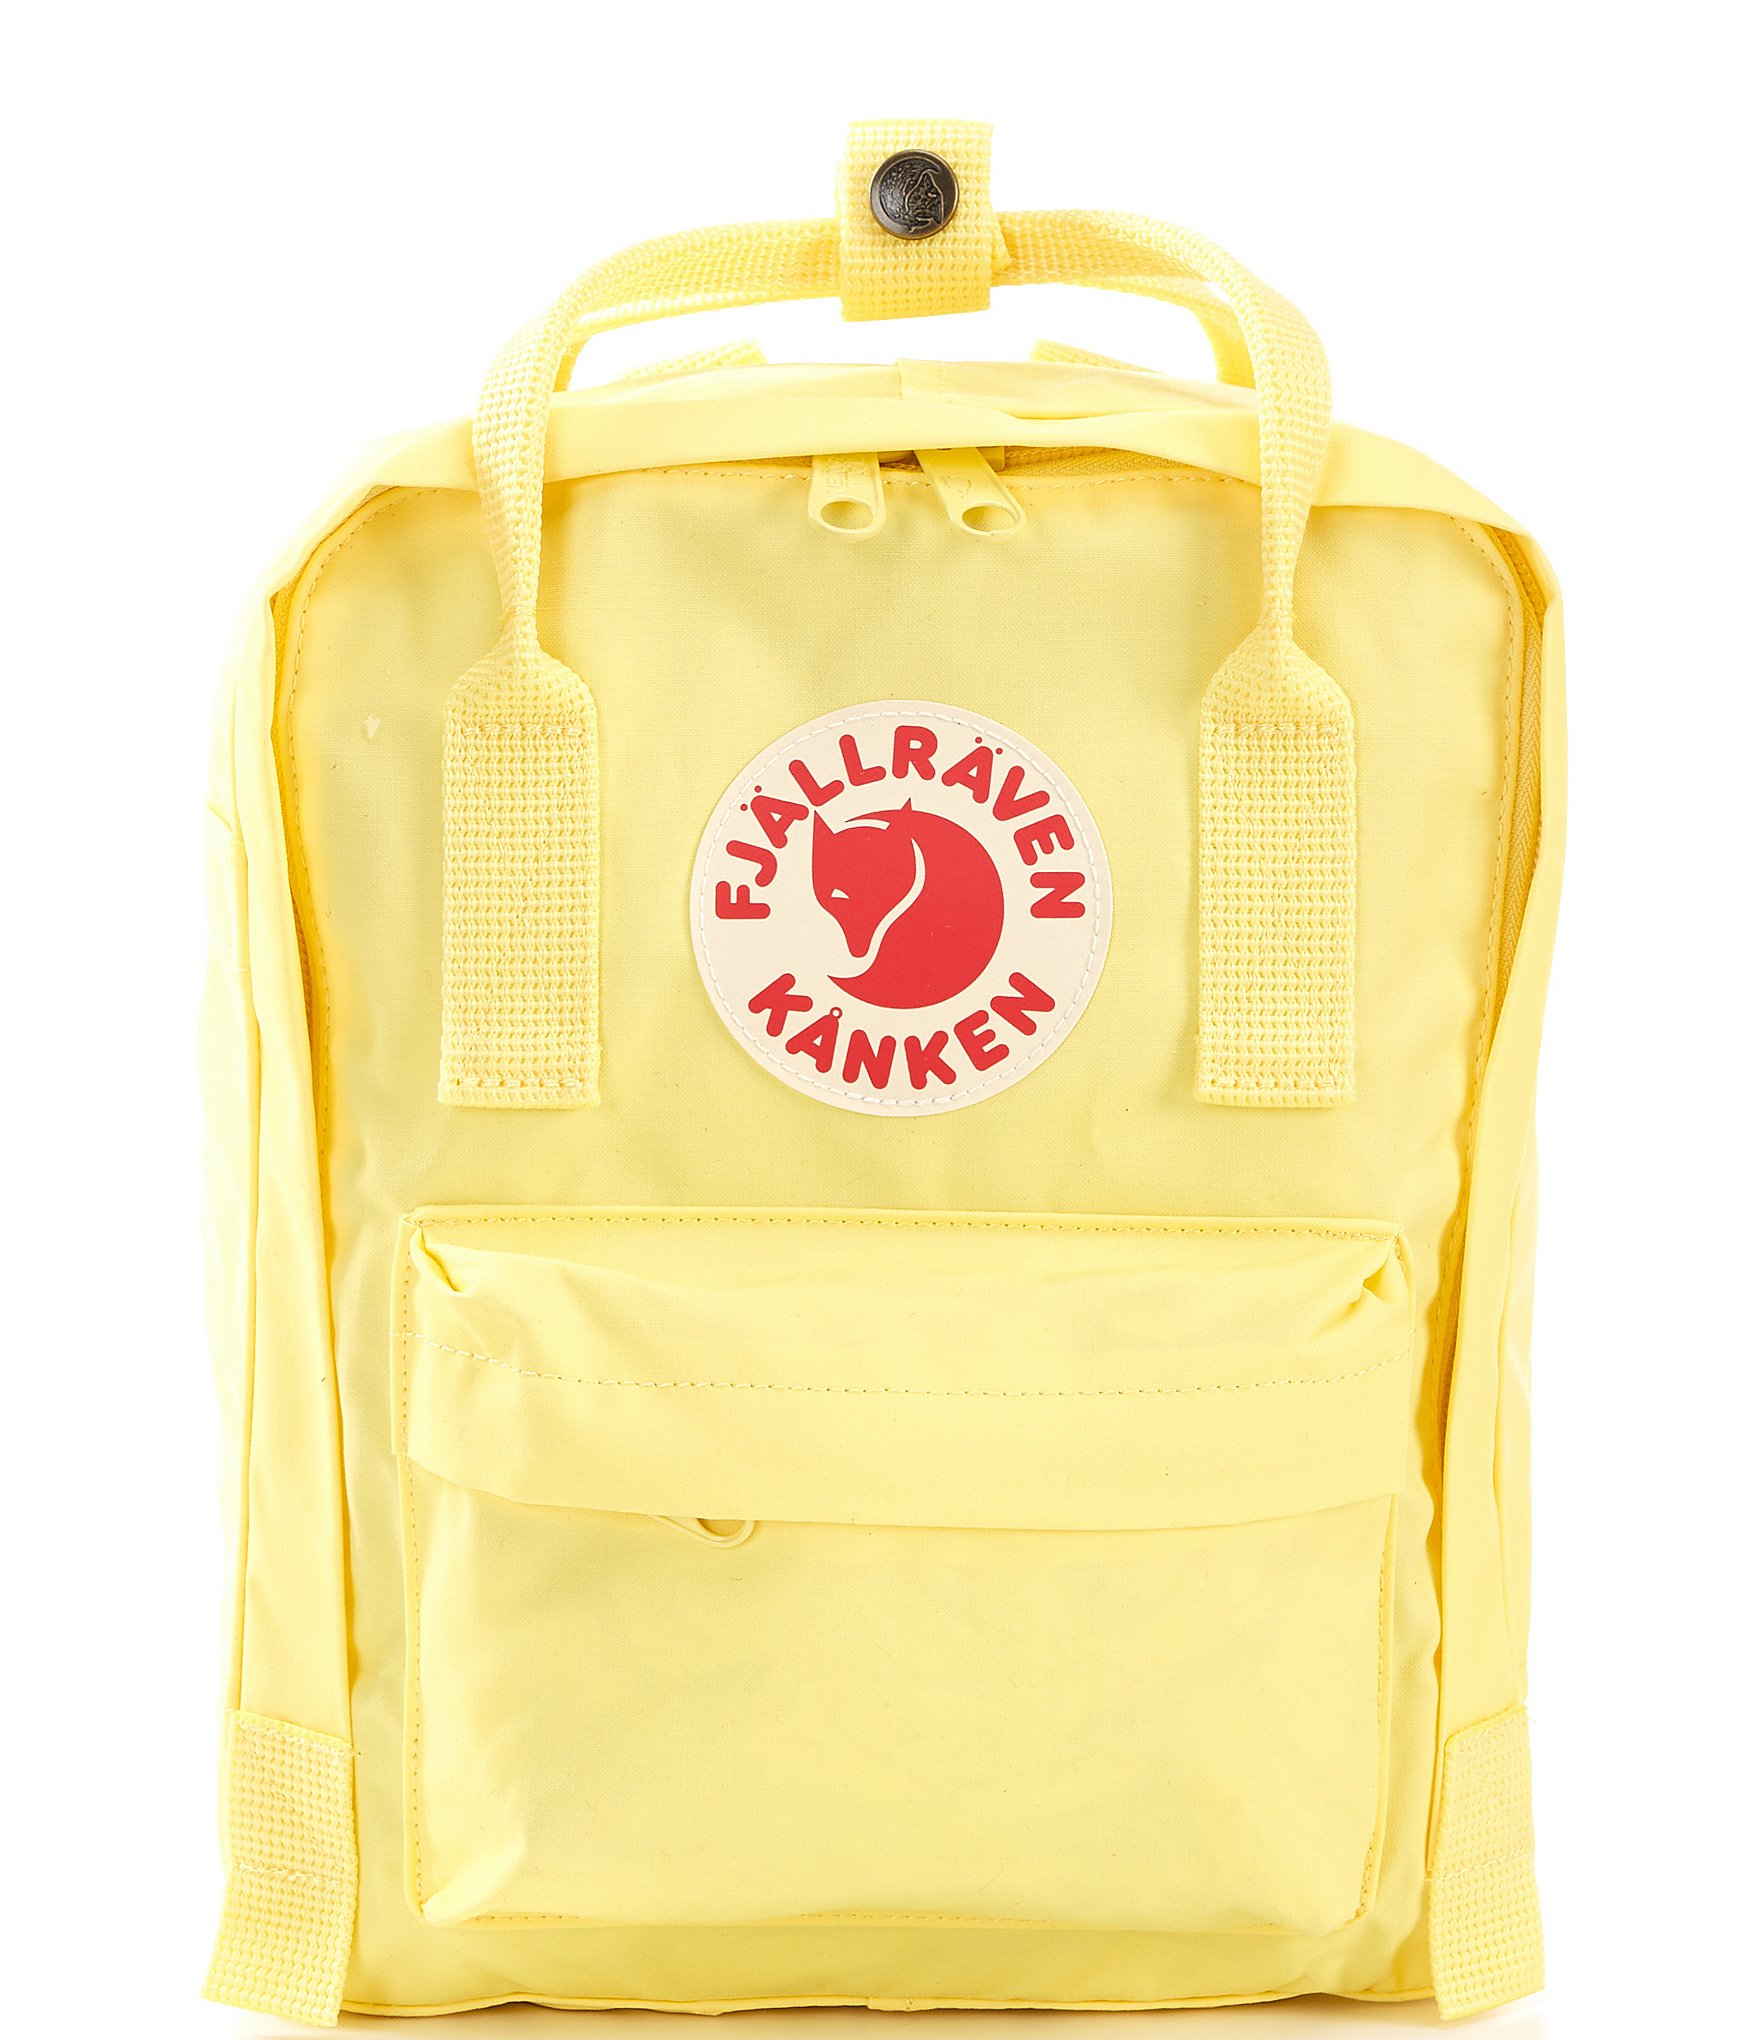 Light Yellow Solid Cross Body Bag - Selling Fast at Pantaloons.com